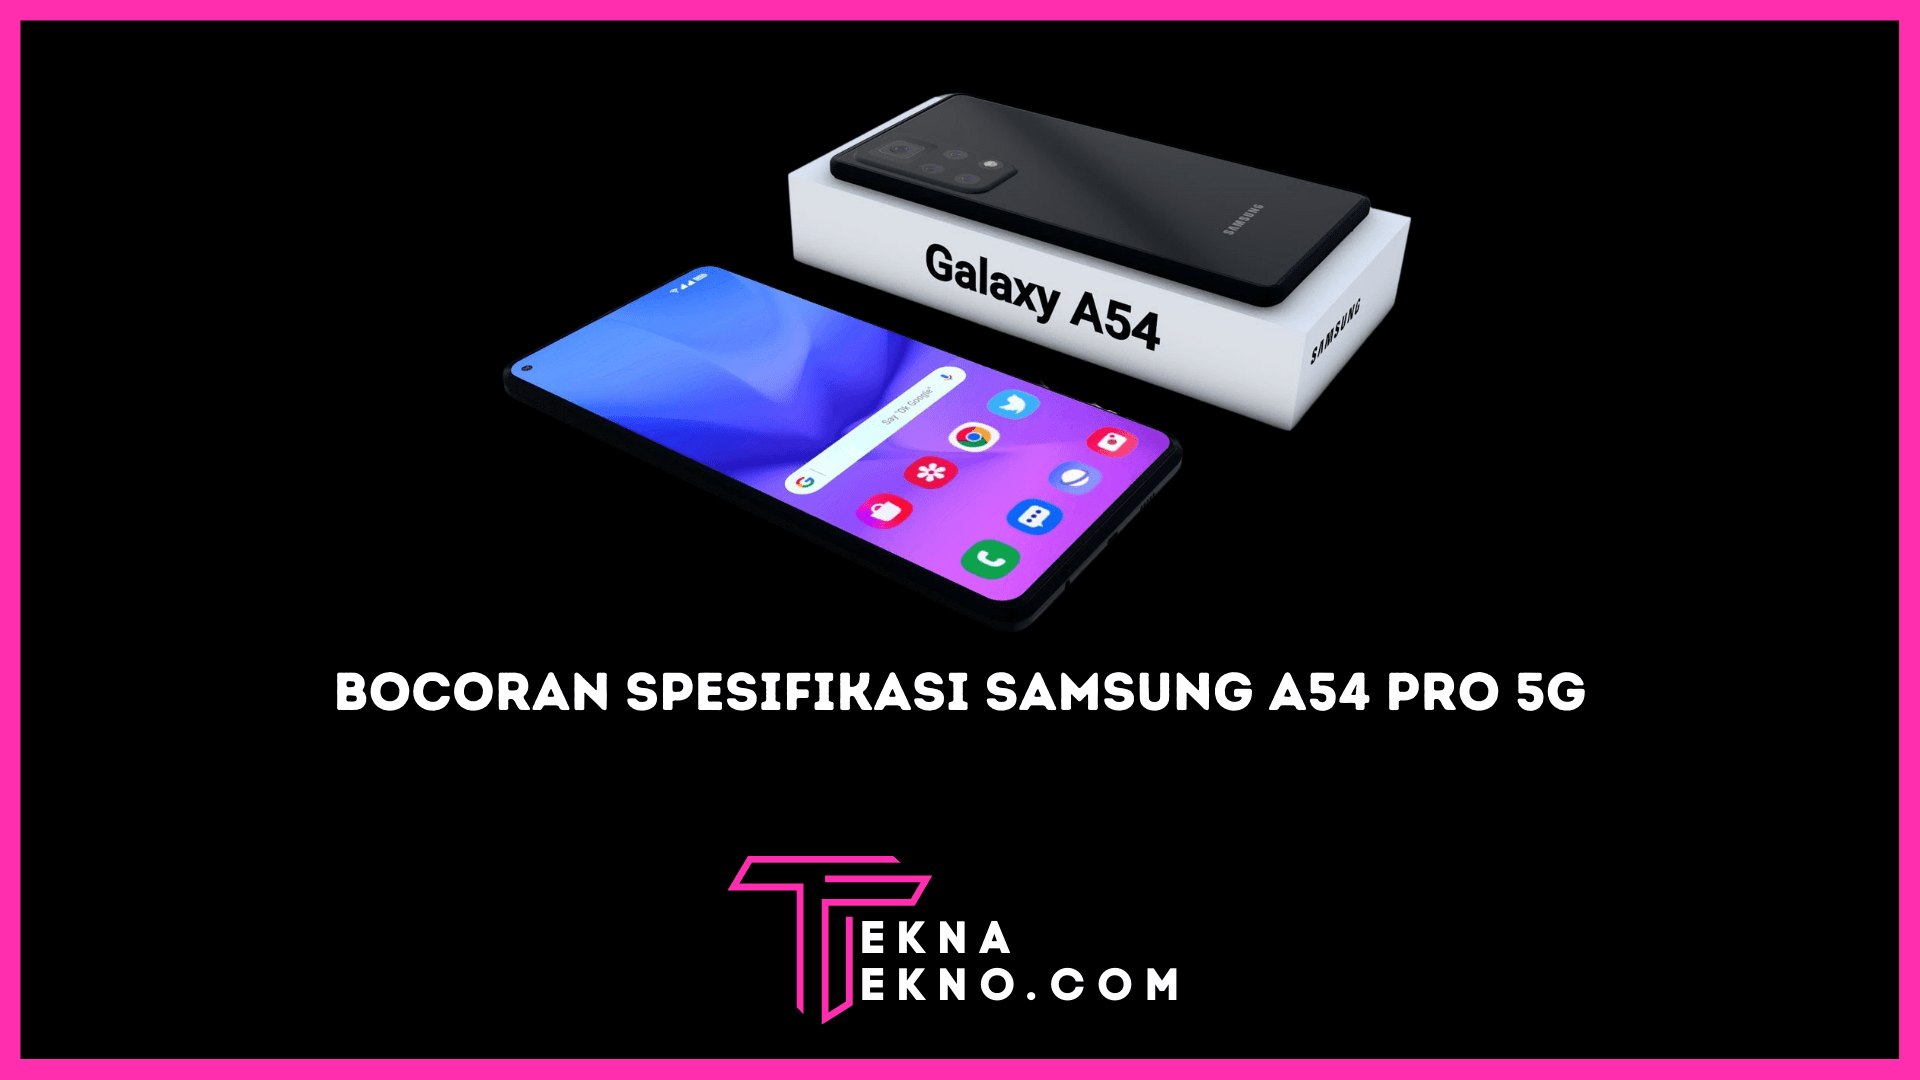 Samsung Galaxy A54 Pro 5G Segera Hadir Bawa Baterai 6000 mAh